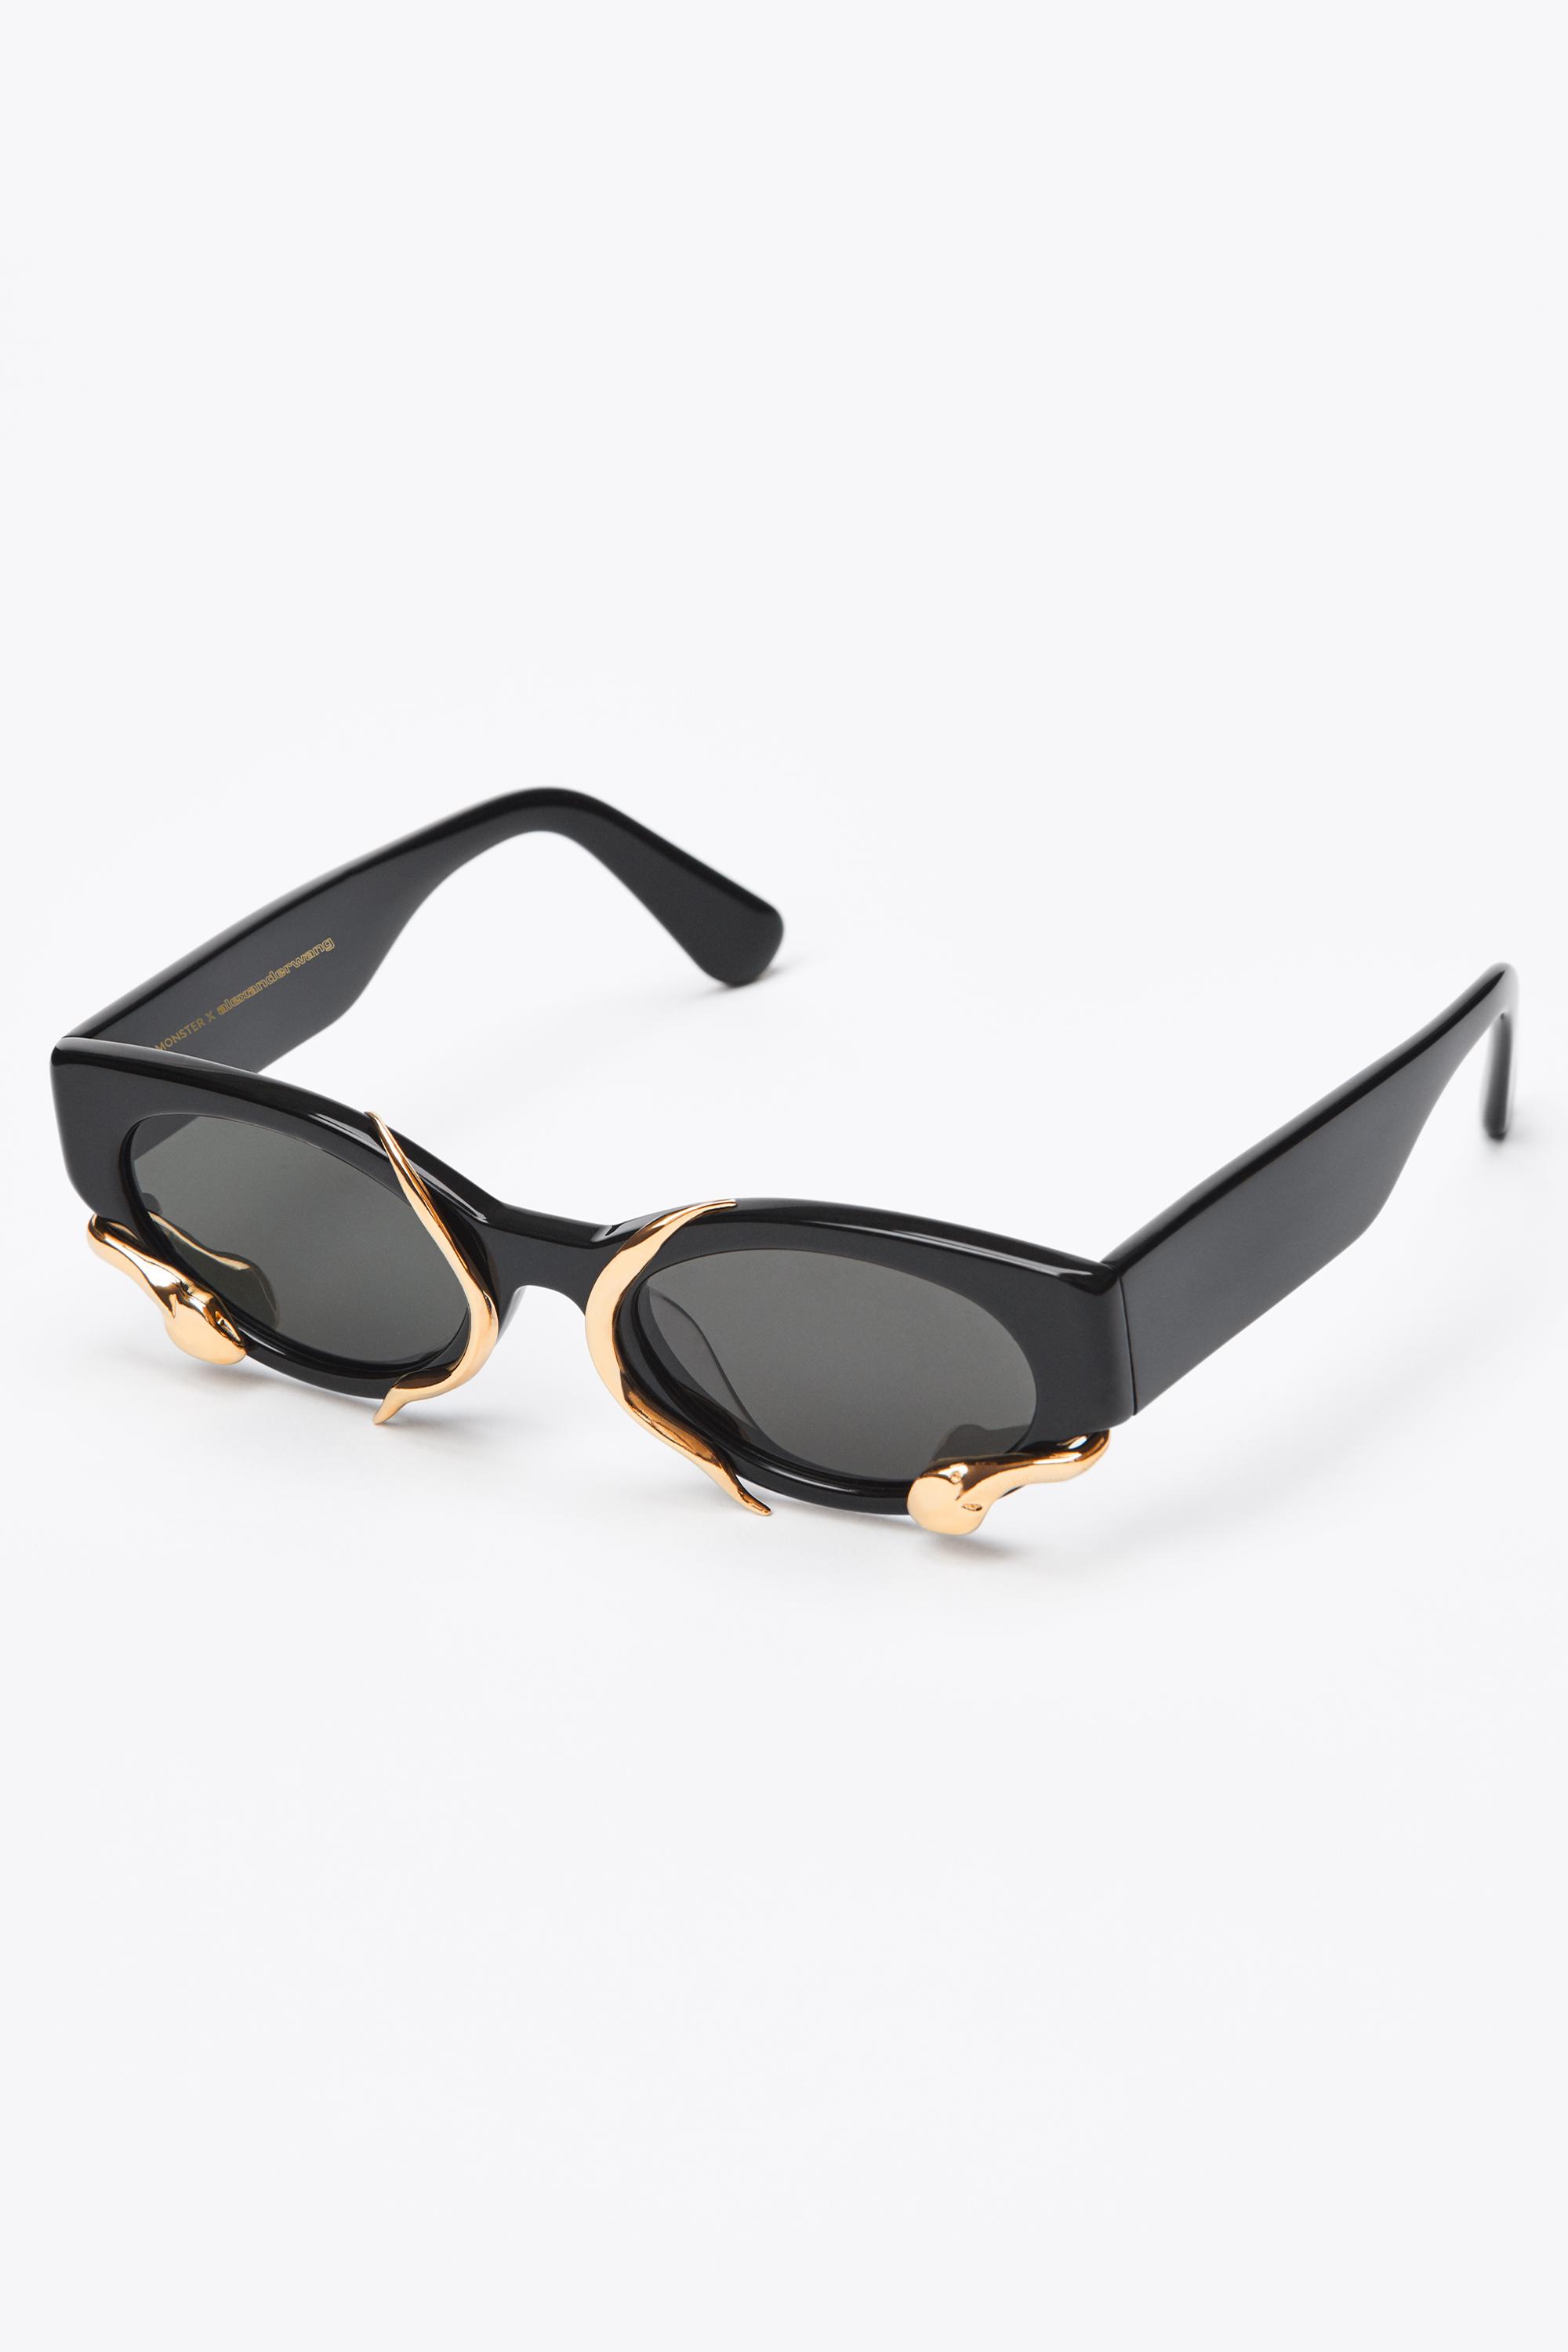 Alexander Wang M.priss Sunglasses in Black/Gold (Black) | Lyst